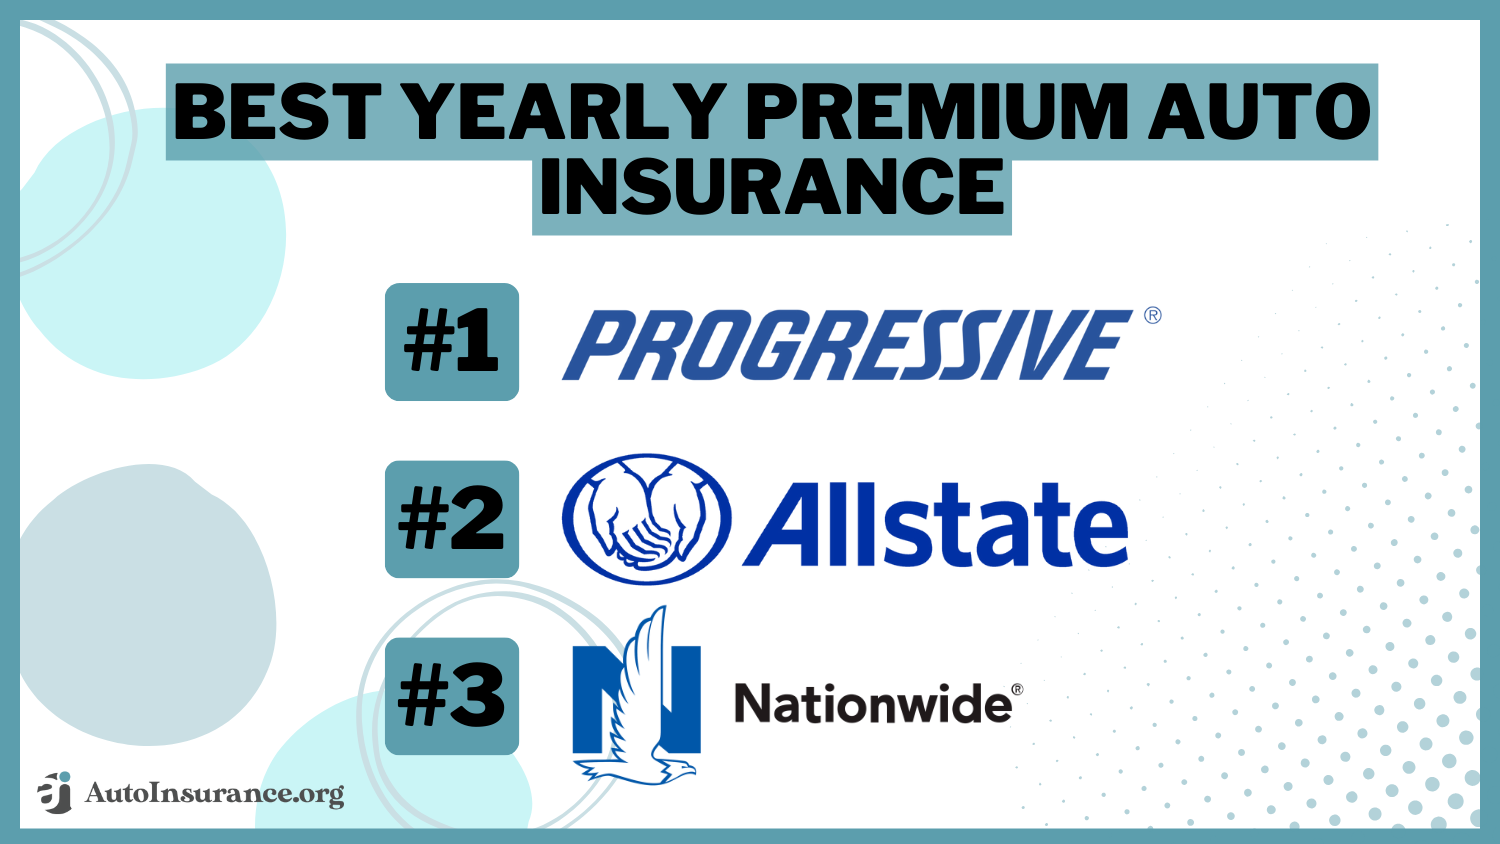 Best Yearly Premium Auto Insurance: Progressive, Allstate, Nationwide